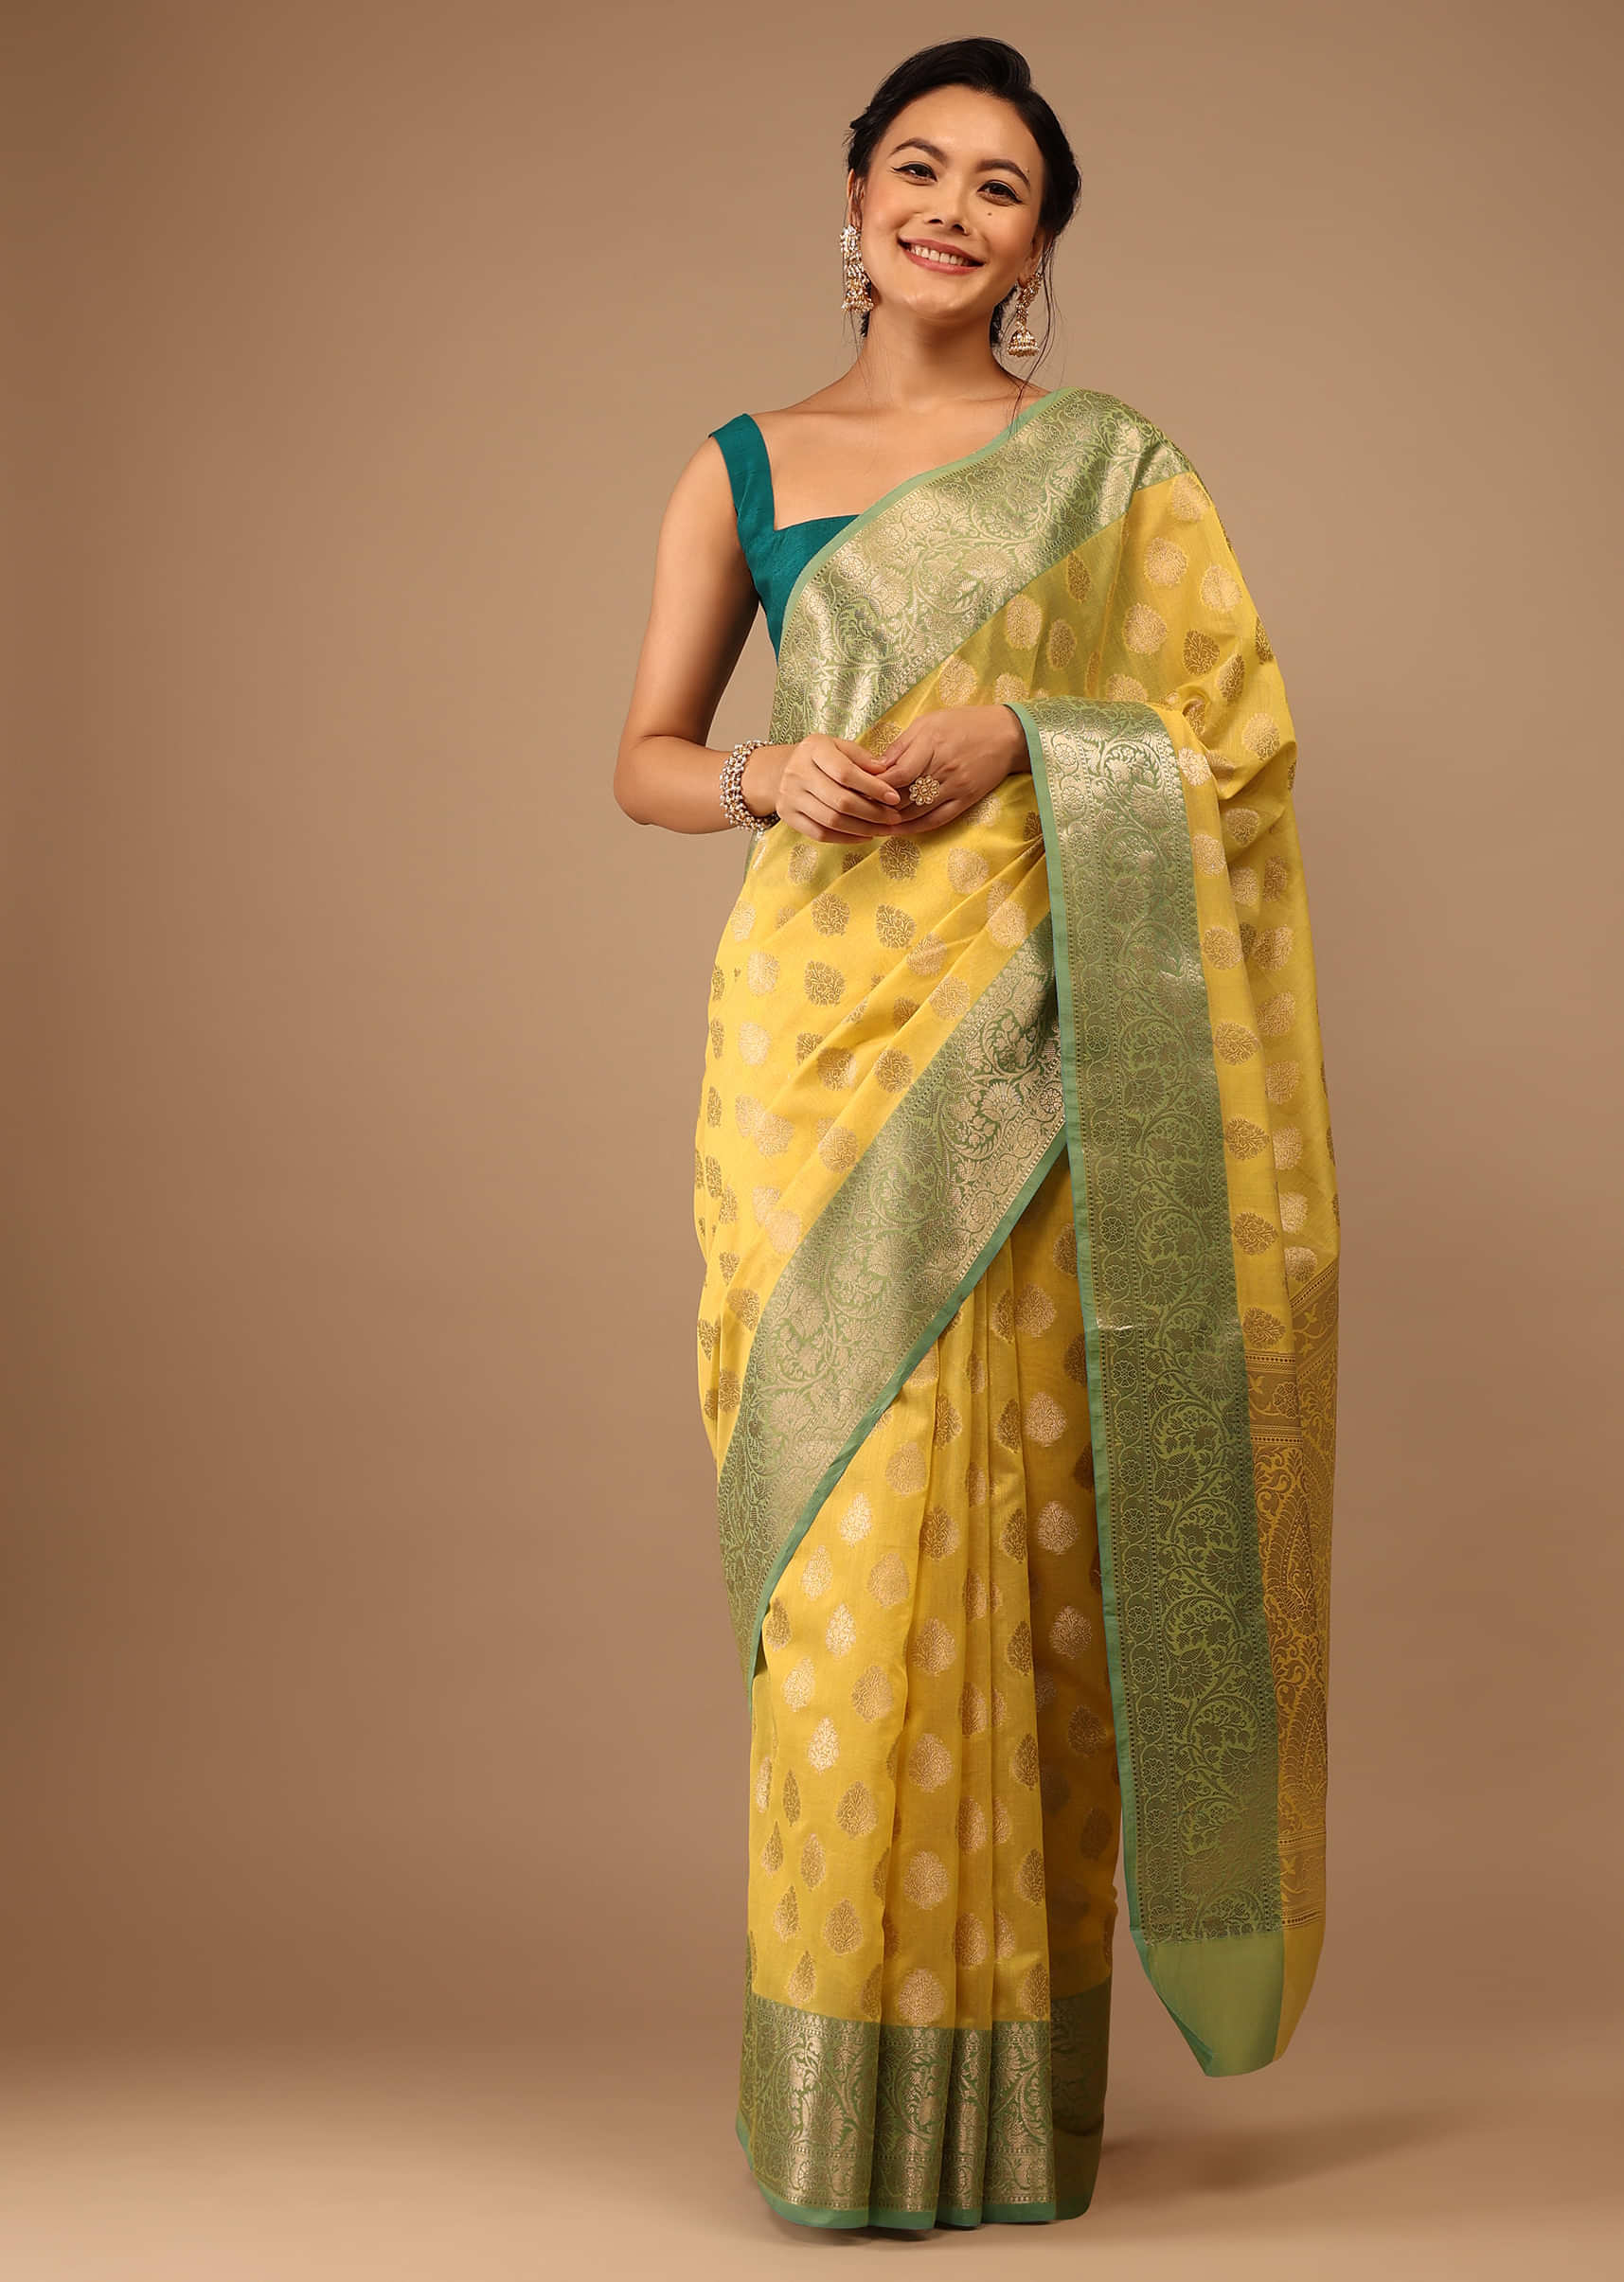 Cyber Yellow Saree In Banarsi Chanderi And Pure Handloom Cotton